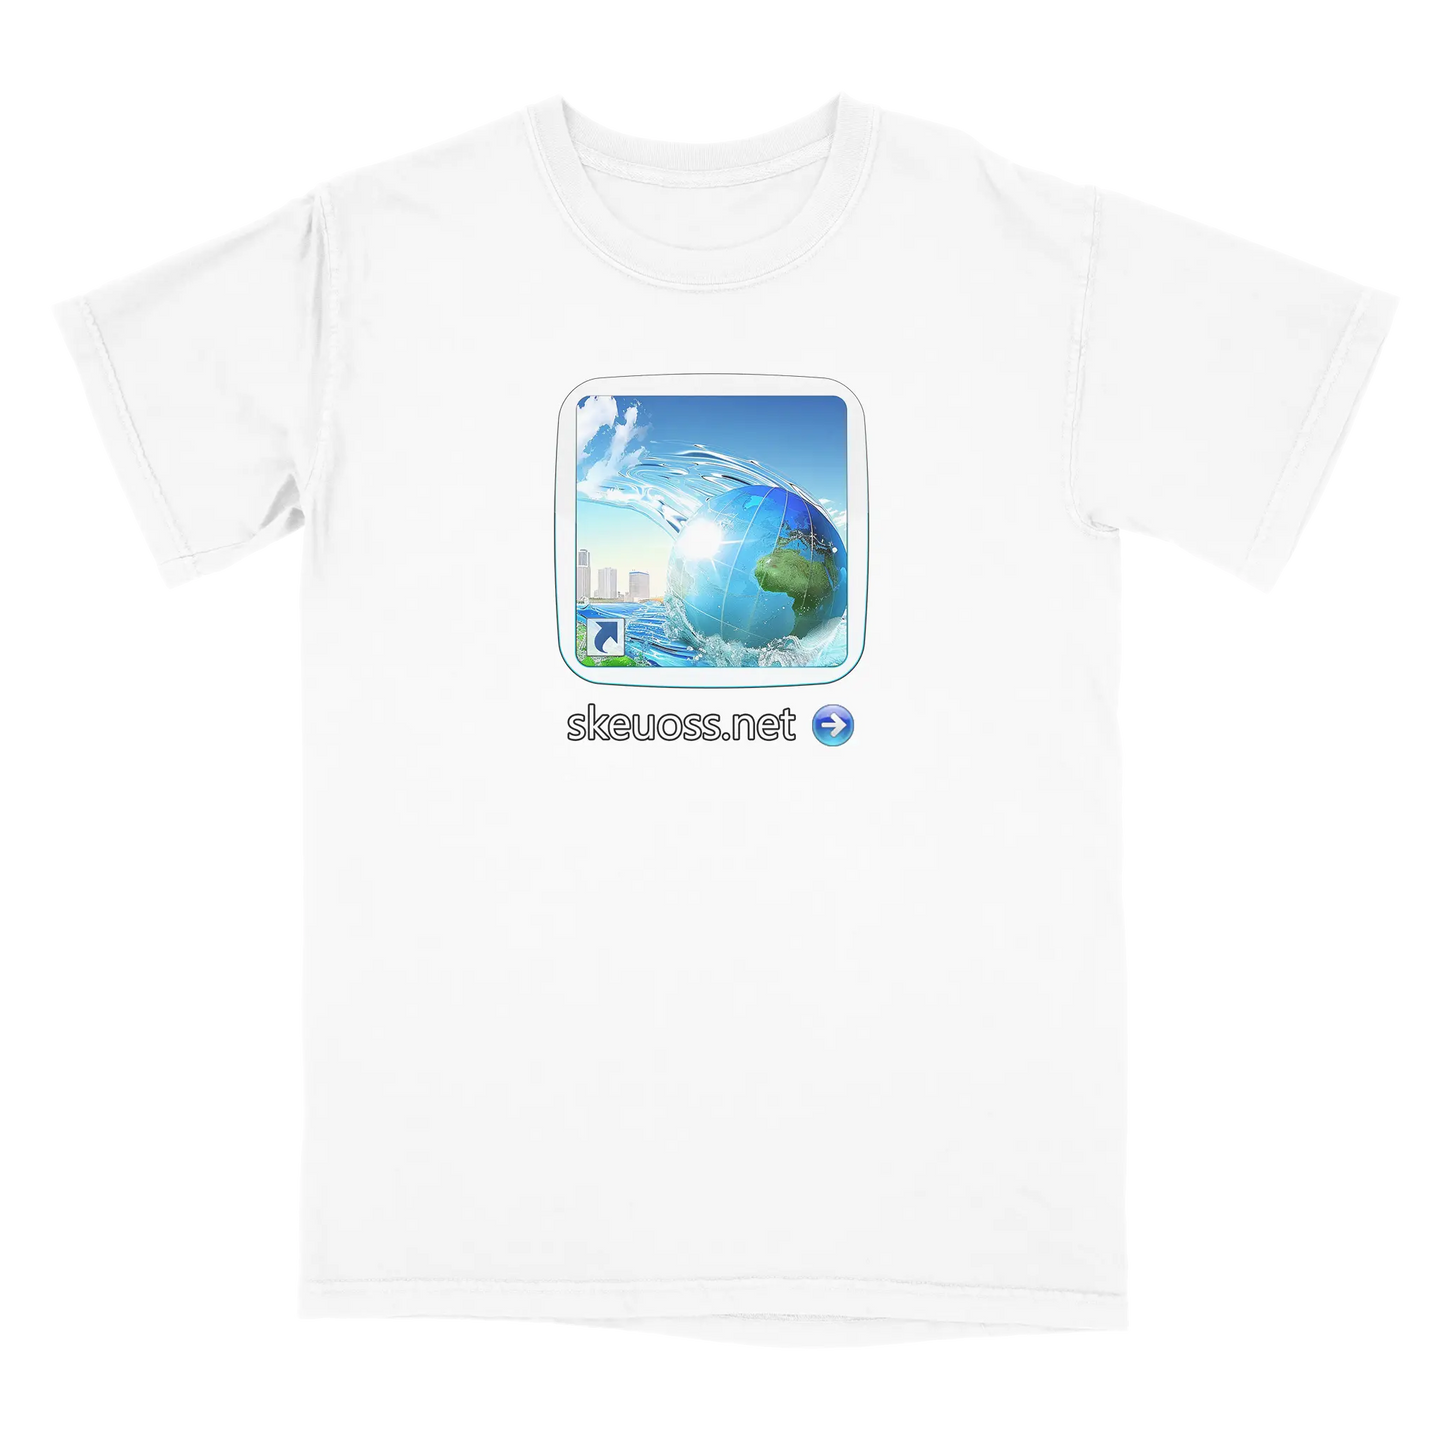 Frutiger Aero T-shirt - User Login Collection - User 372